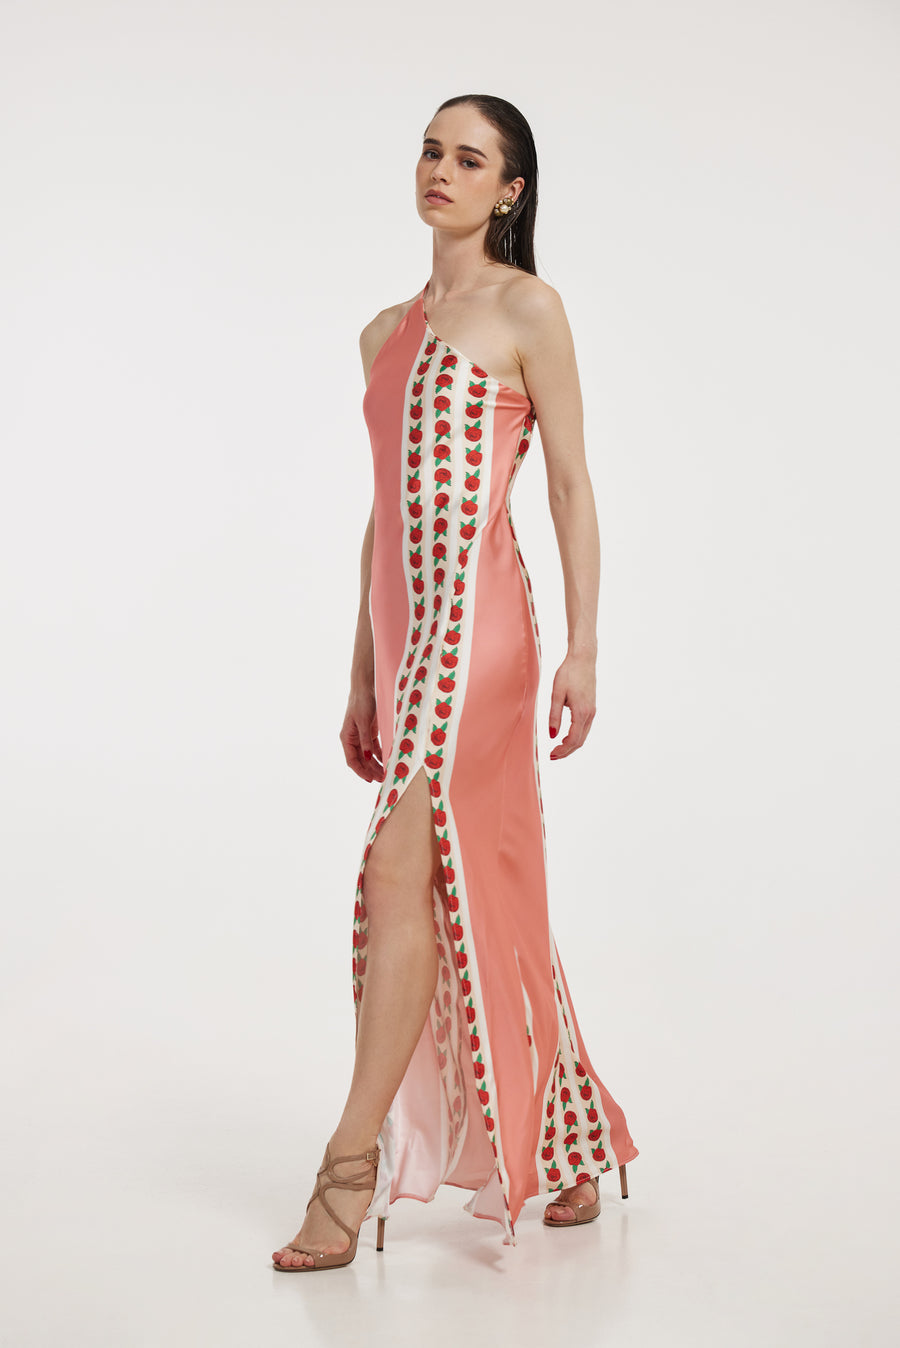 Musa Dress (Coral)